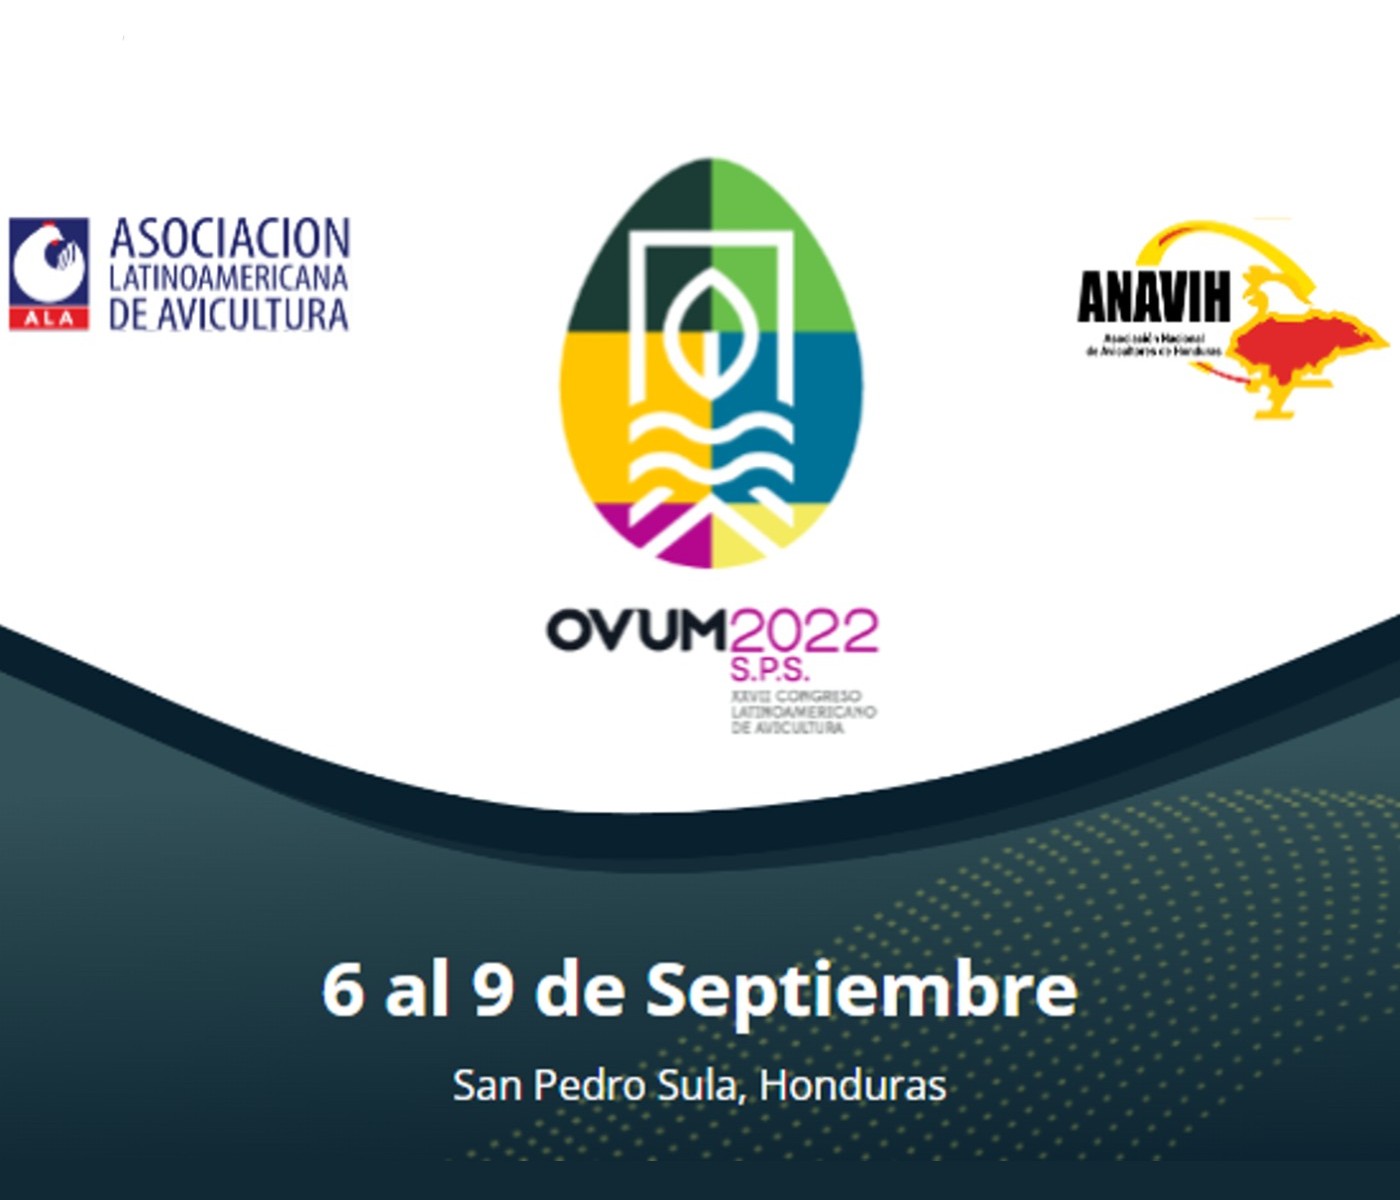 ¡Prepárate! Para vivir la experiencia OVUM 2022: XXVII Congreso Latinoamericano de Avicultura